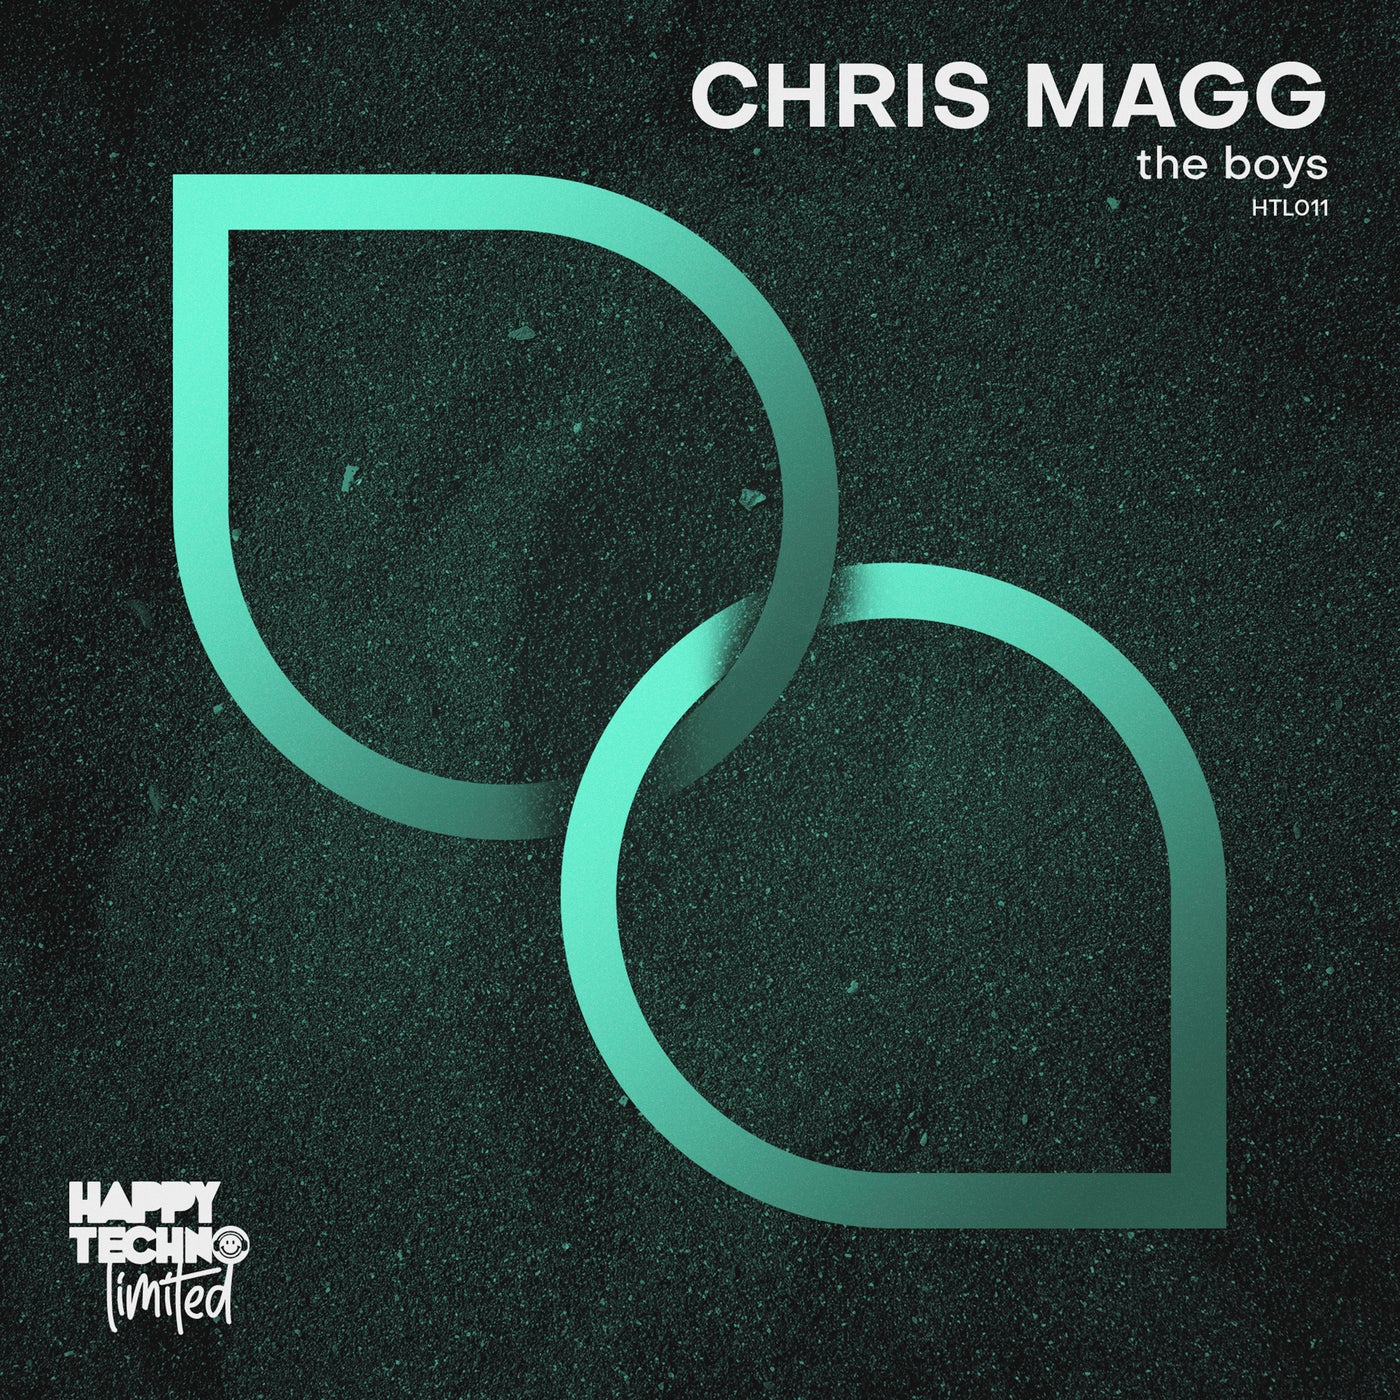 Chris Magg – The Boys [HTL011]